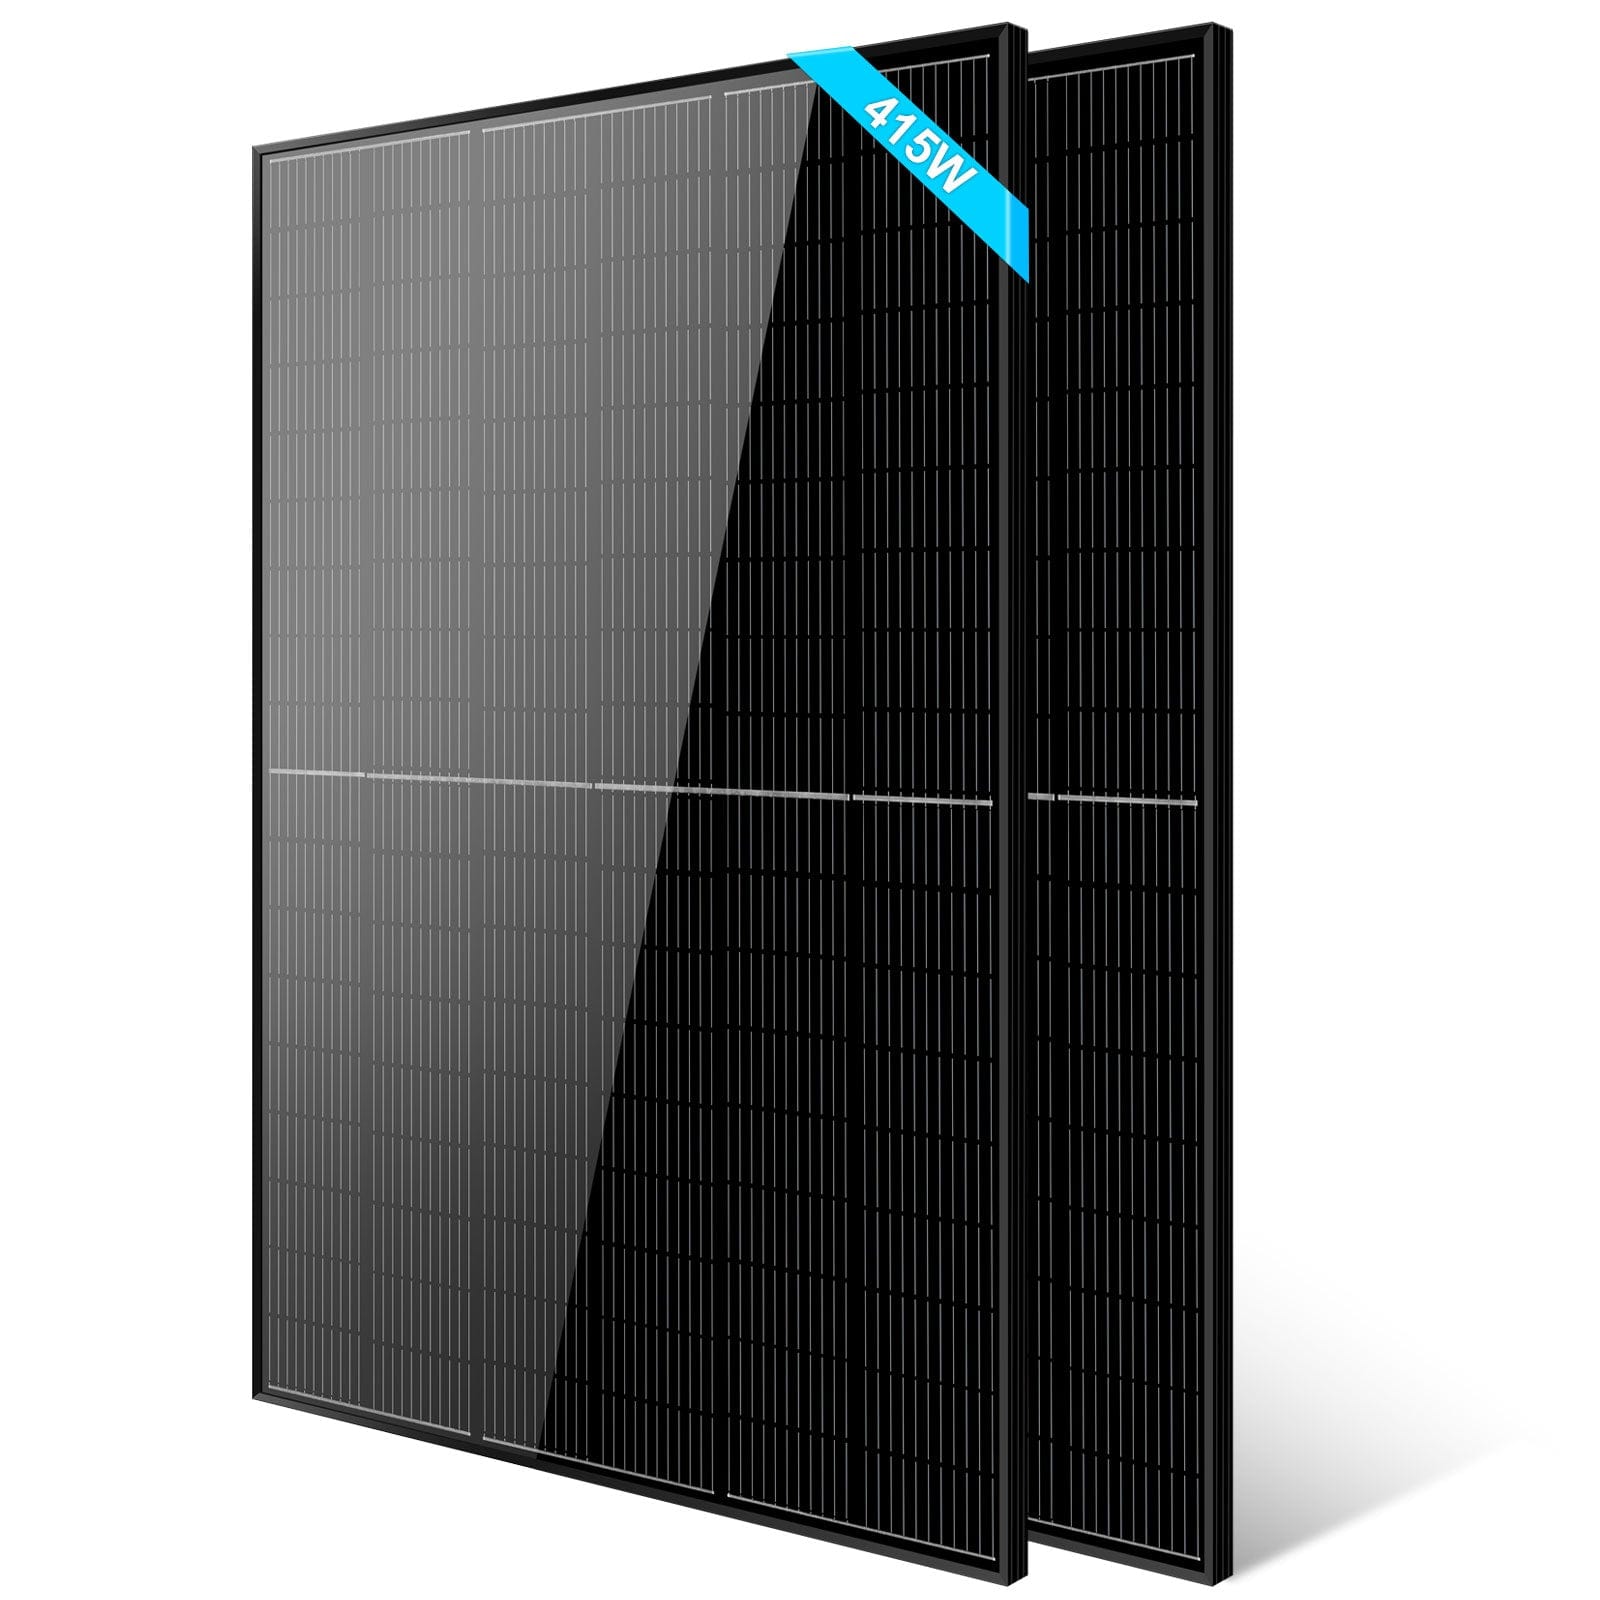 415W Mono Black PERC Solar Panel SunGoldPower Monocrystalline Solar Panel